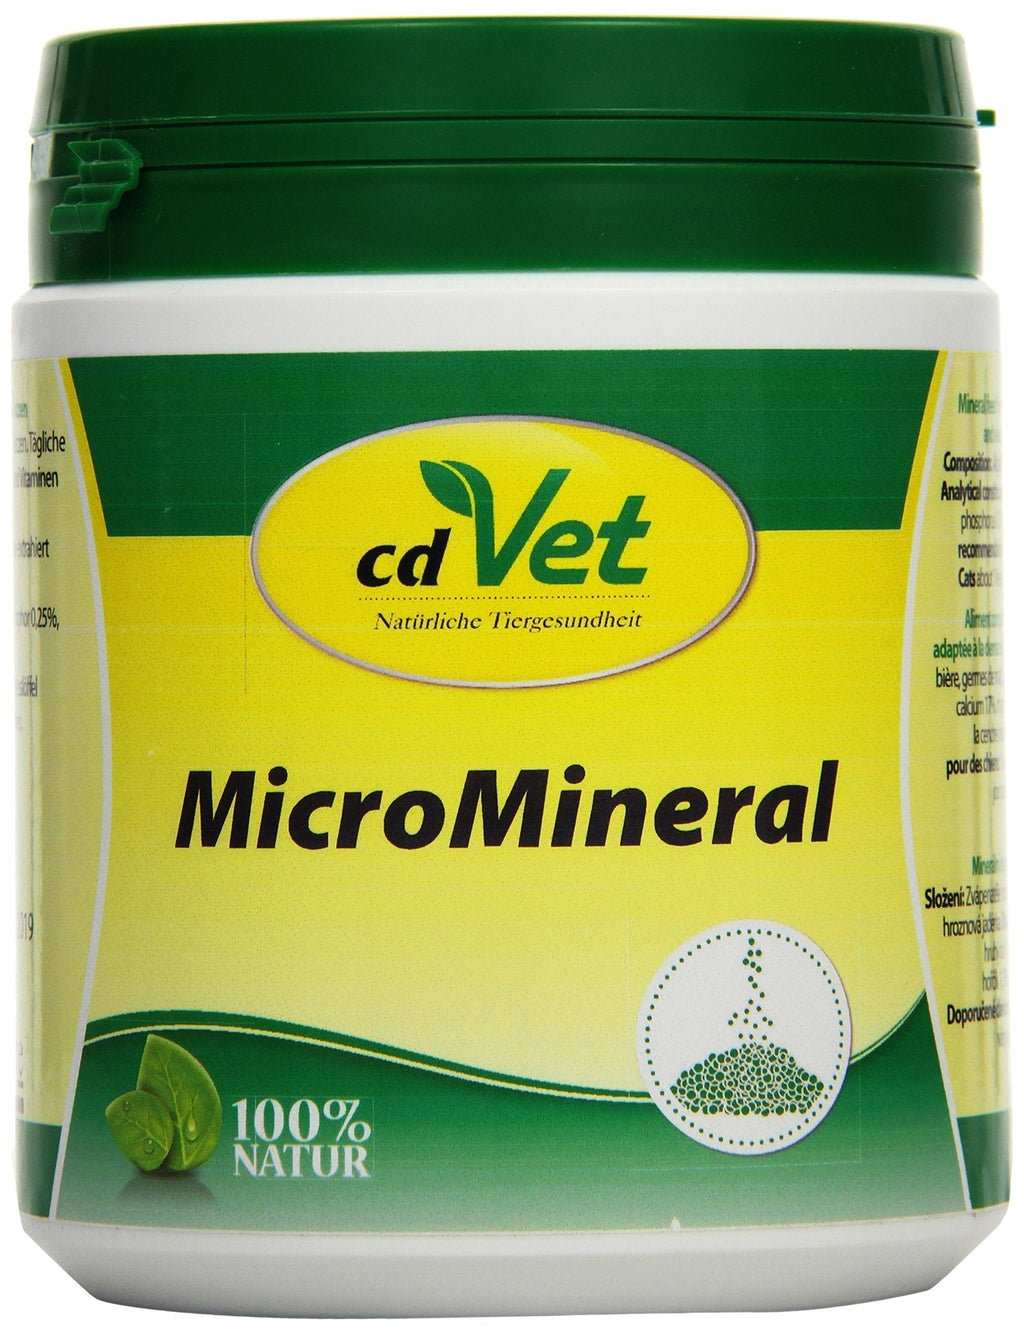 cdVet Naturprodukte MicroMineral Hund & Katze 500 g - natural micronutrient supply - relief detoxification organs - mineral balance - metabolism - coat - vitamin protection - - PawsPlanet Australia